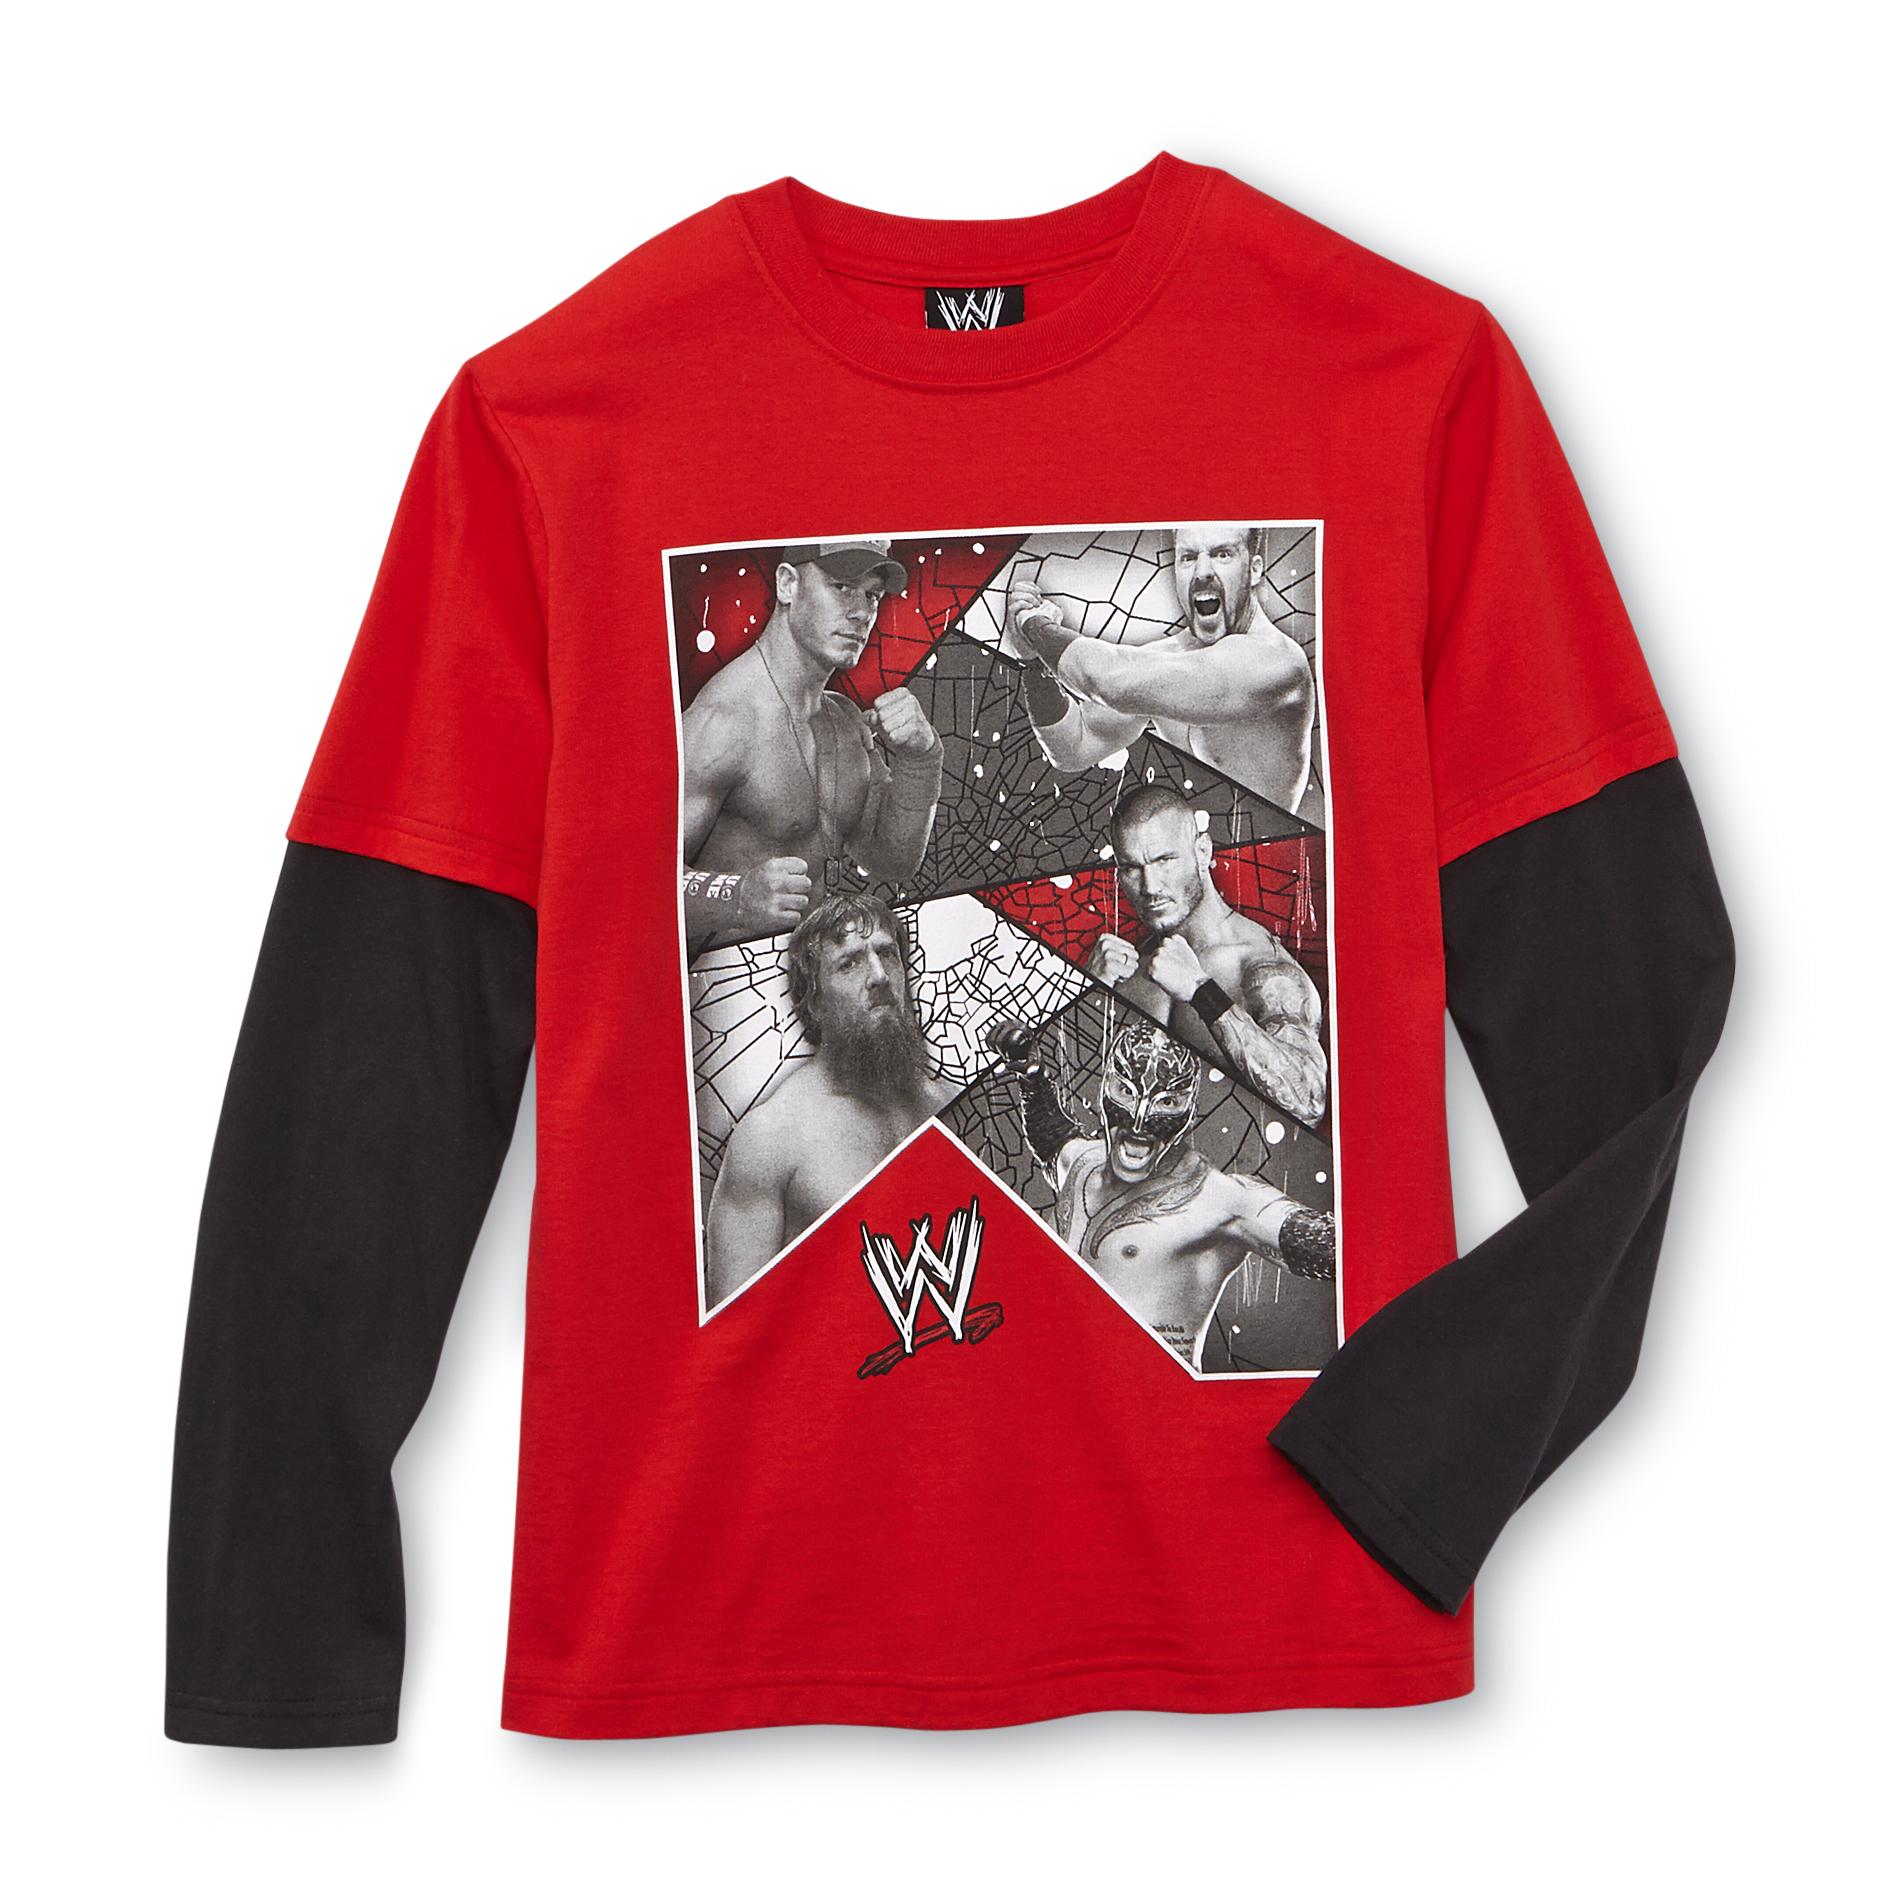 WWE Boy's Layered Look Graphic Shirt -  Superstars